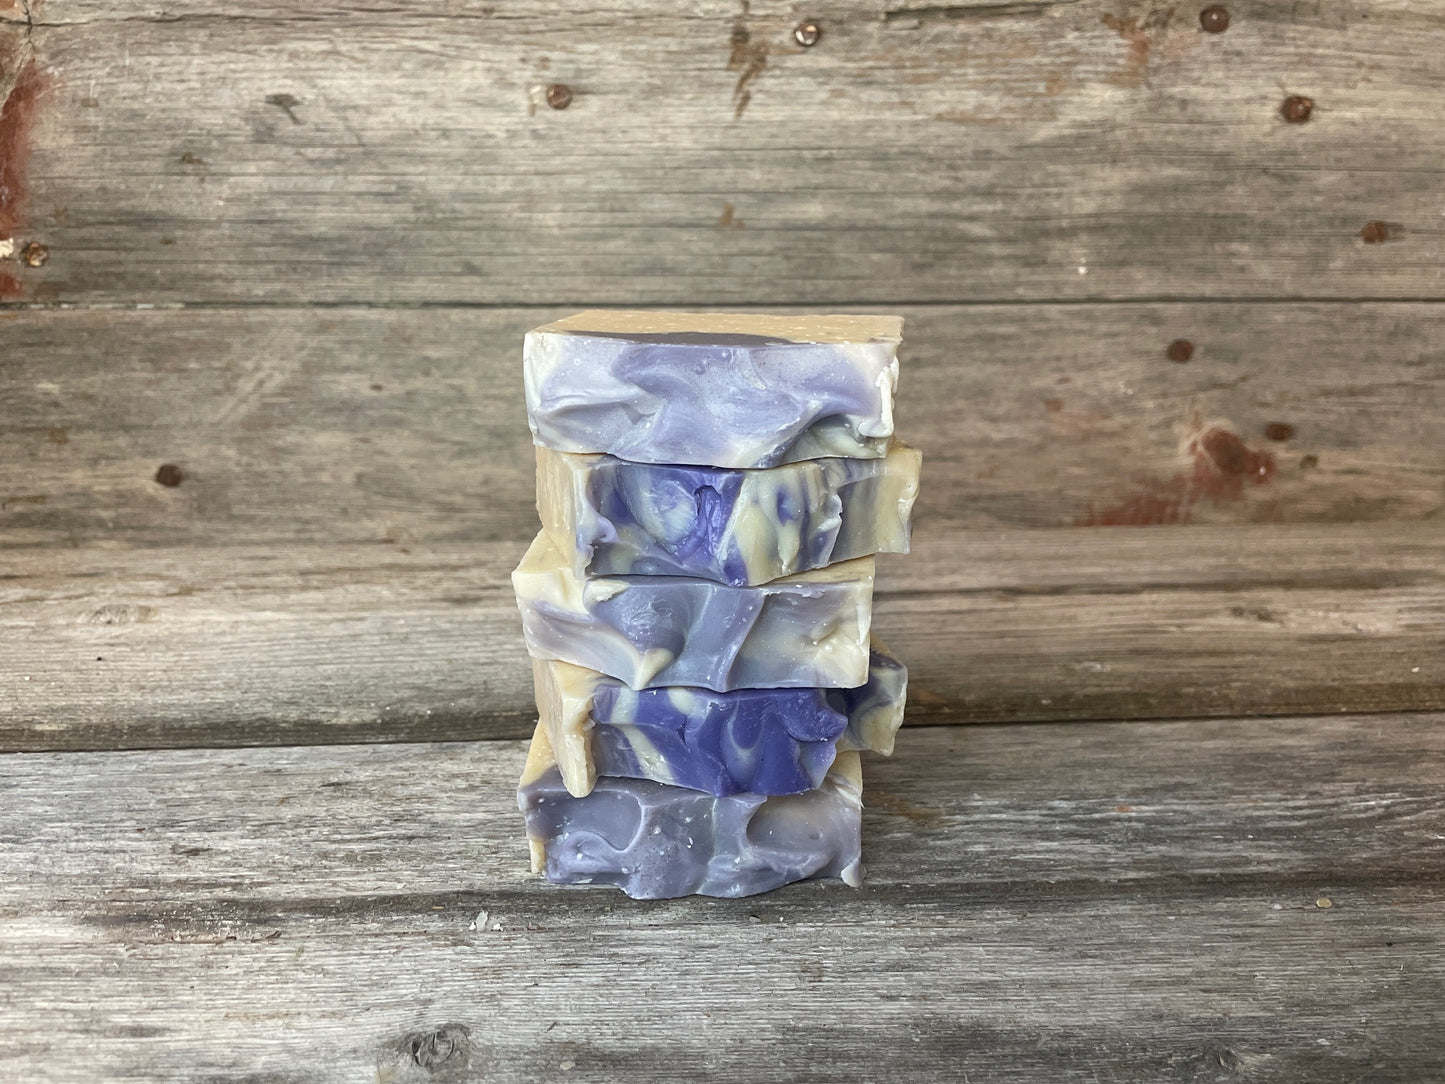 Lavender goat milk bar soap